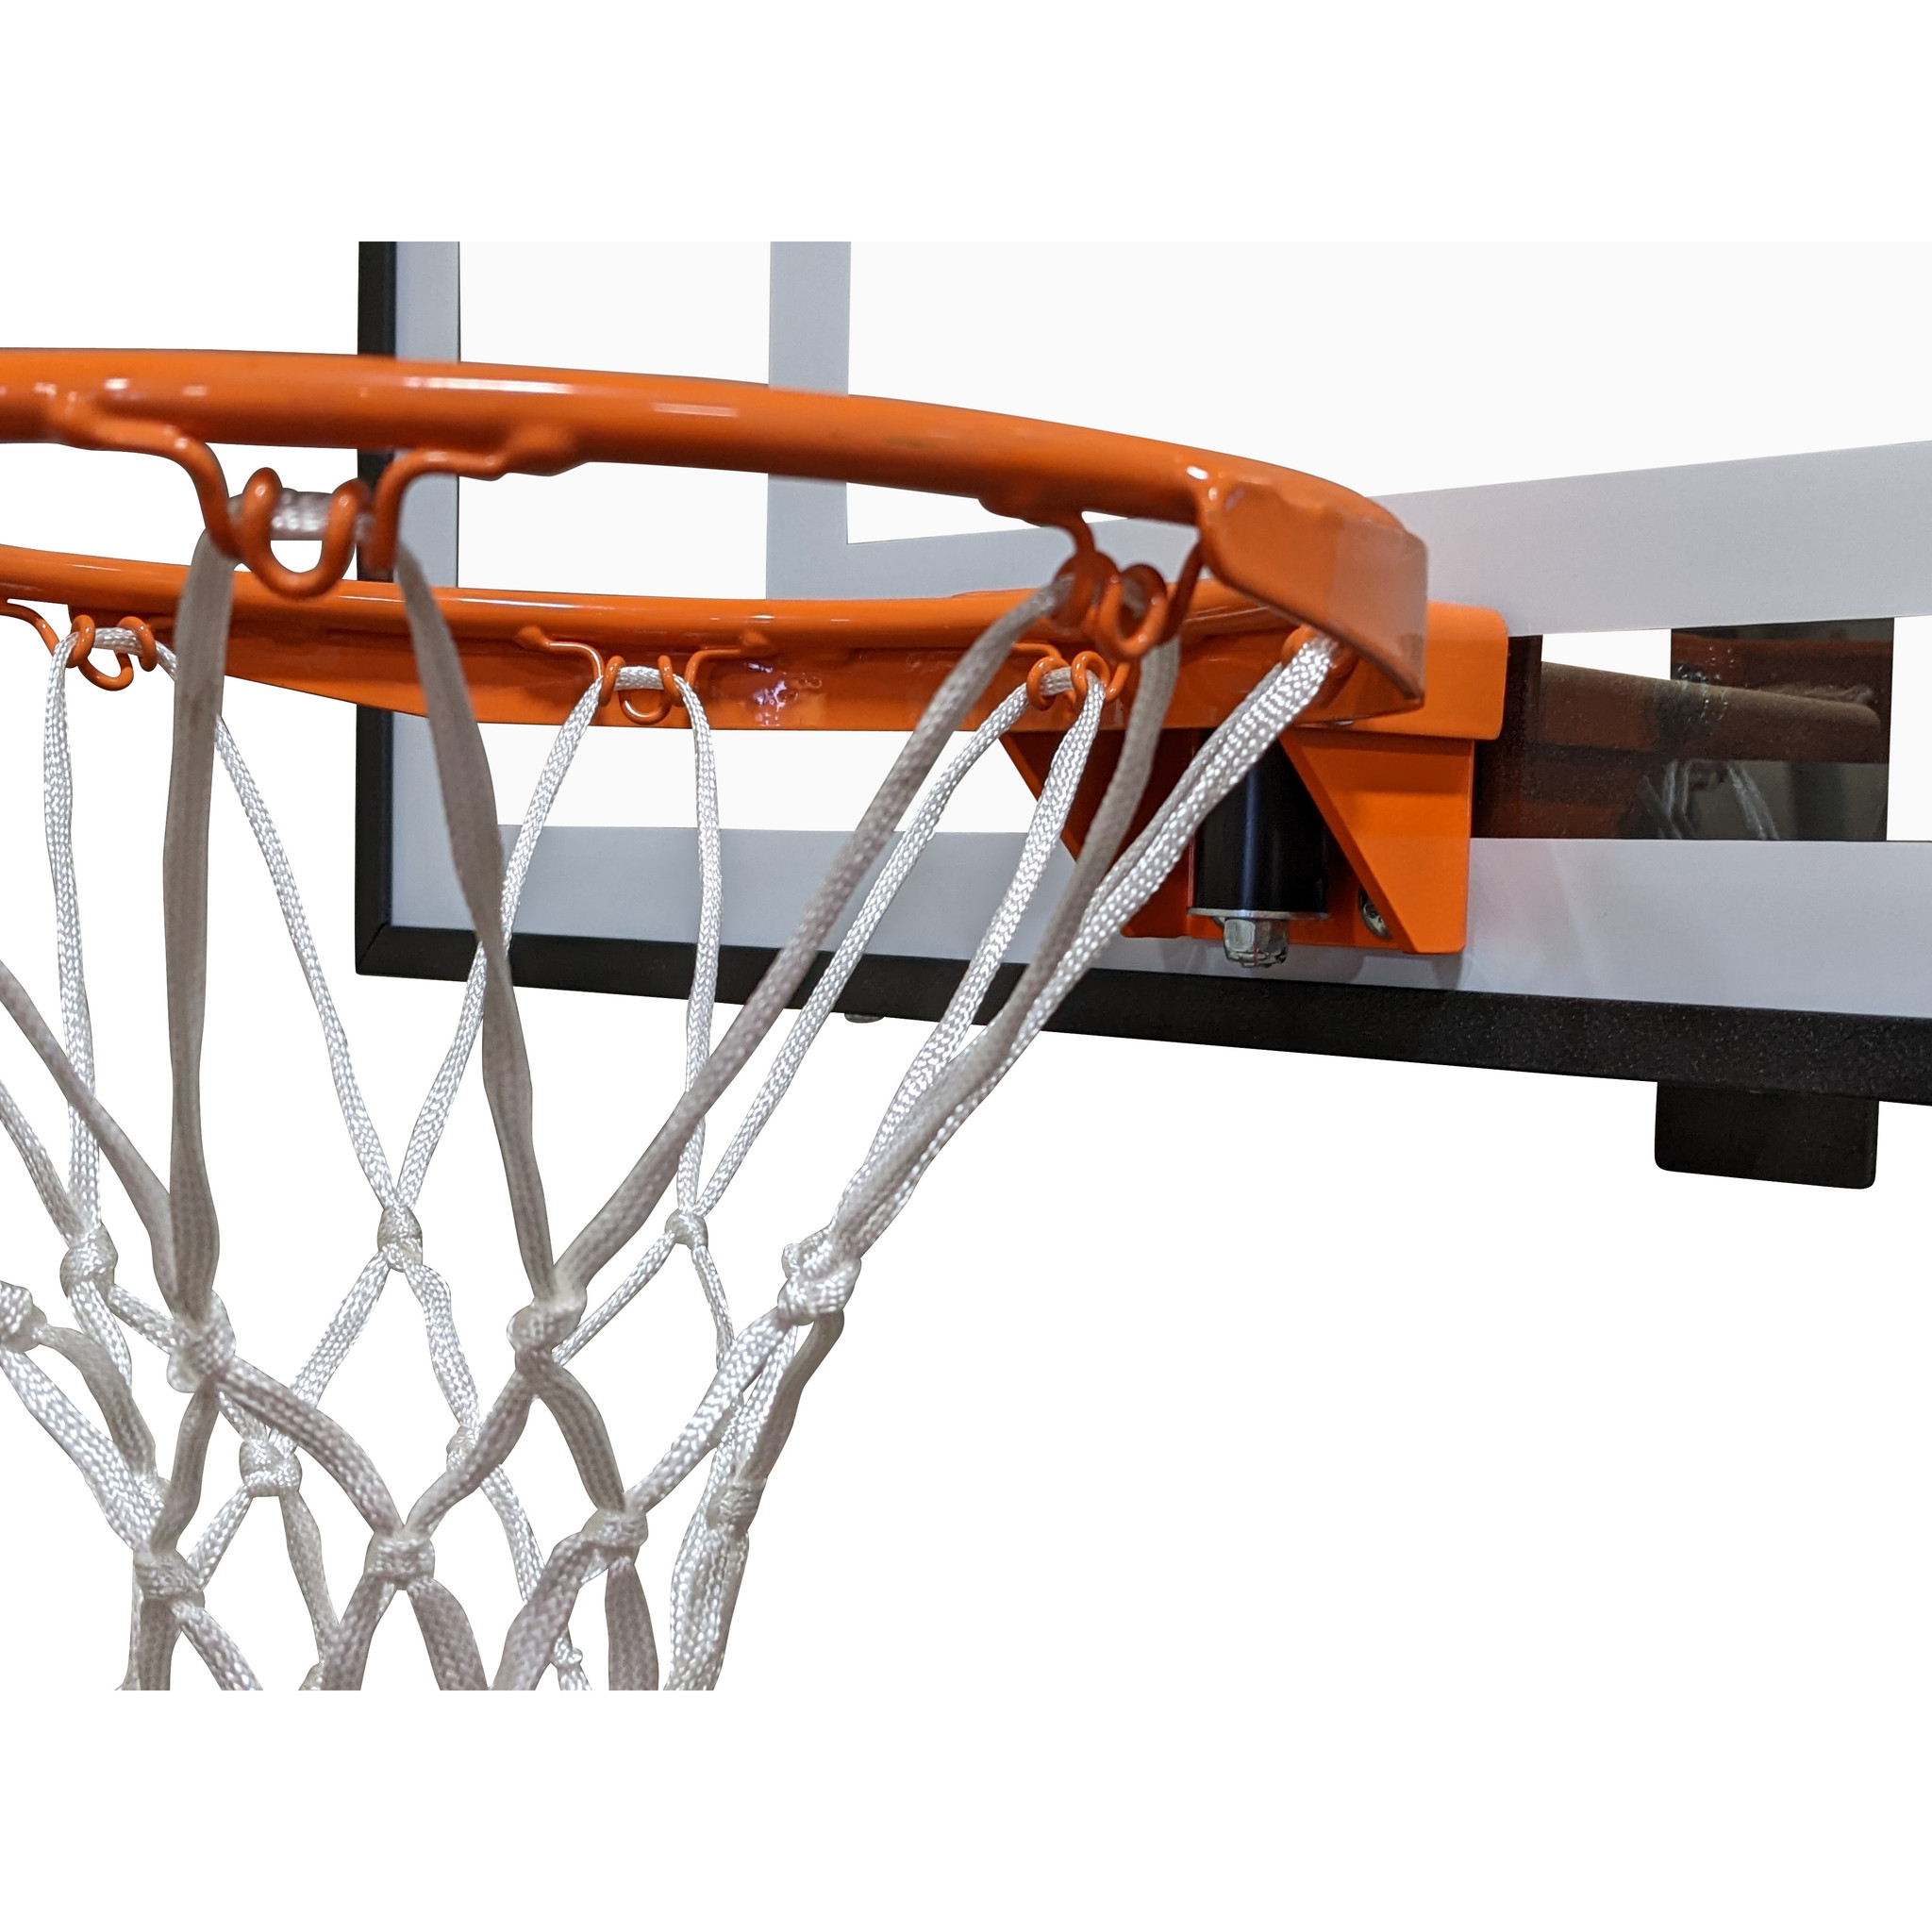 Mini Pro Ultimate Basketball Hoop Set LTP - JustInTymeSports